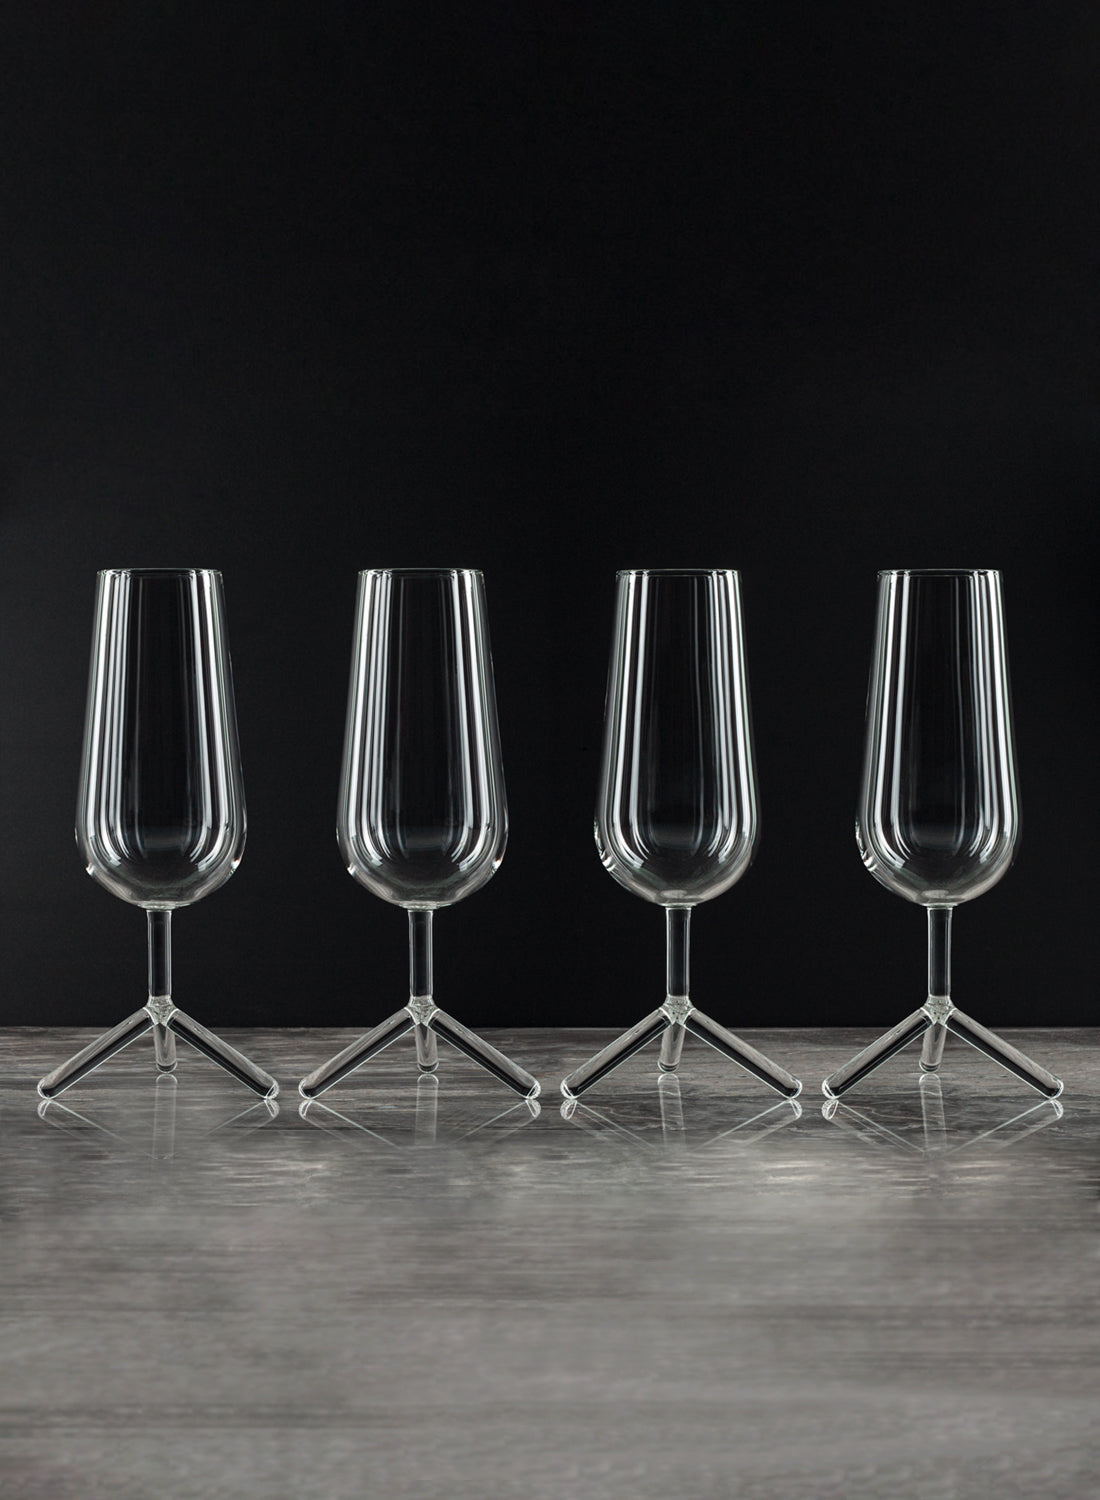 Maarten Baptist Tripod Champagne Glasses (set of 4)